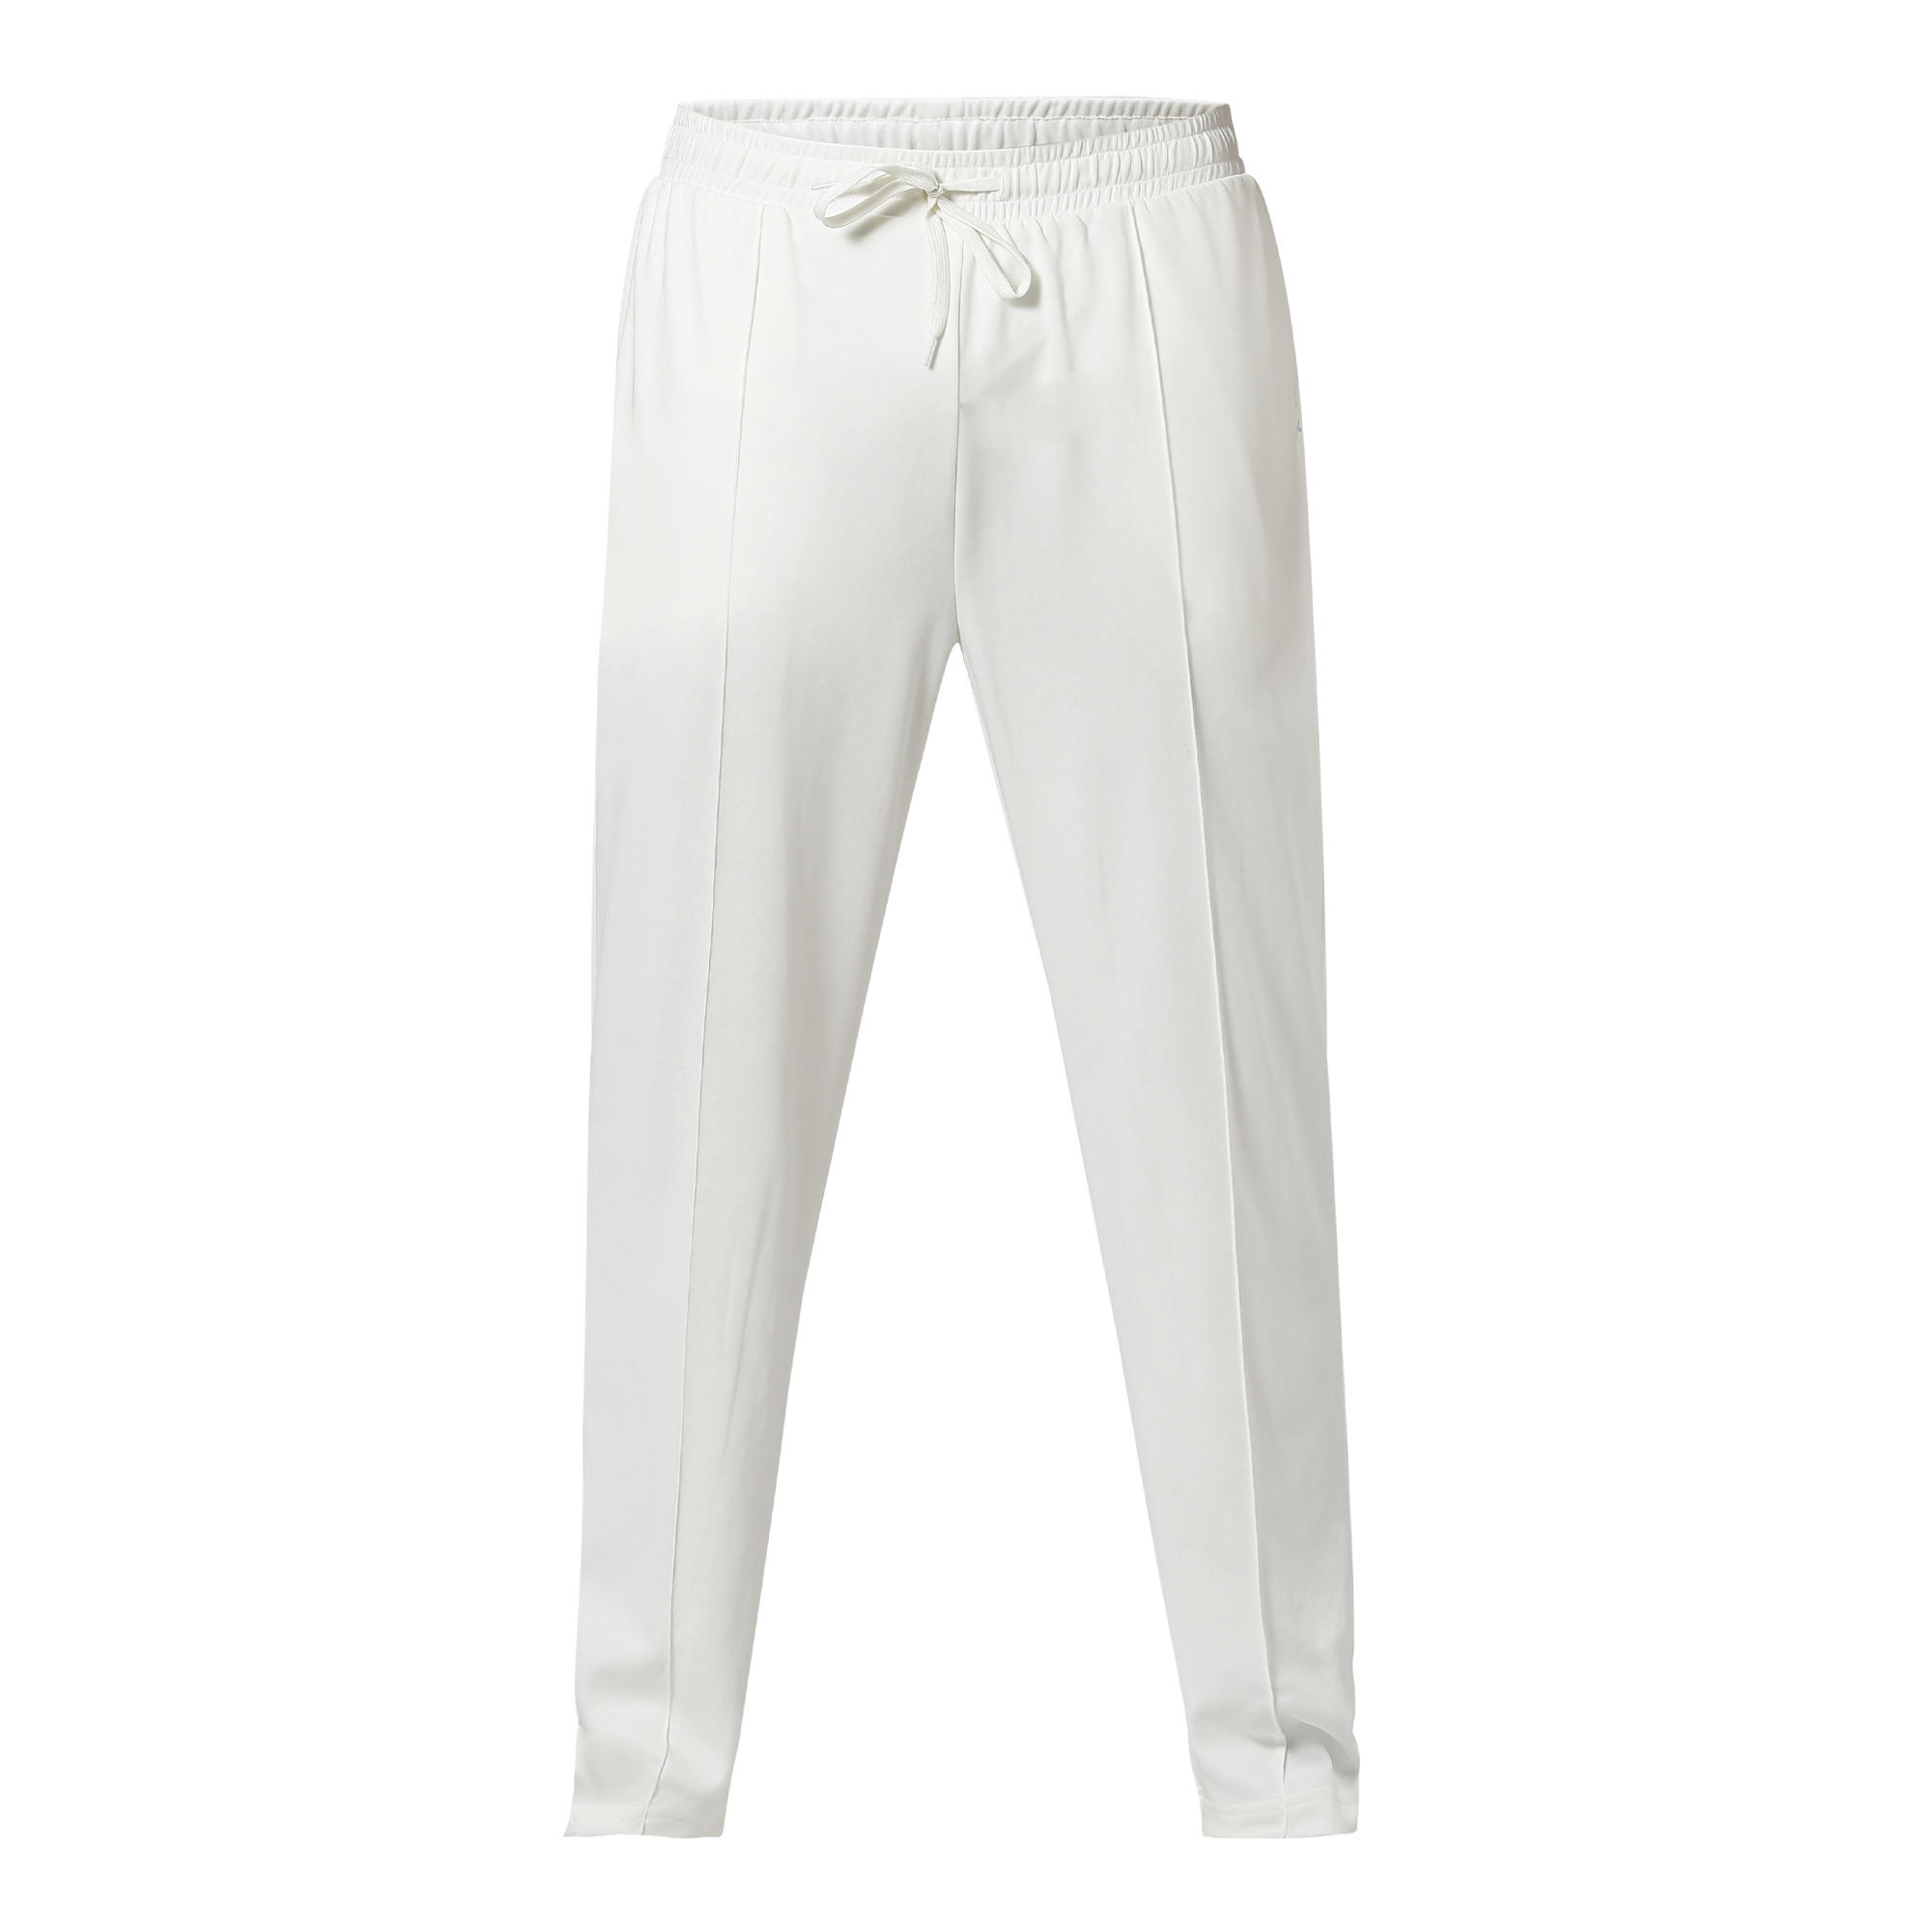 Buy White Track Pants for Boys by INDIAN TERRAIN BOYS Online  Ajiocom